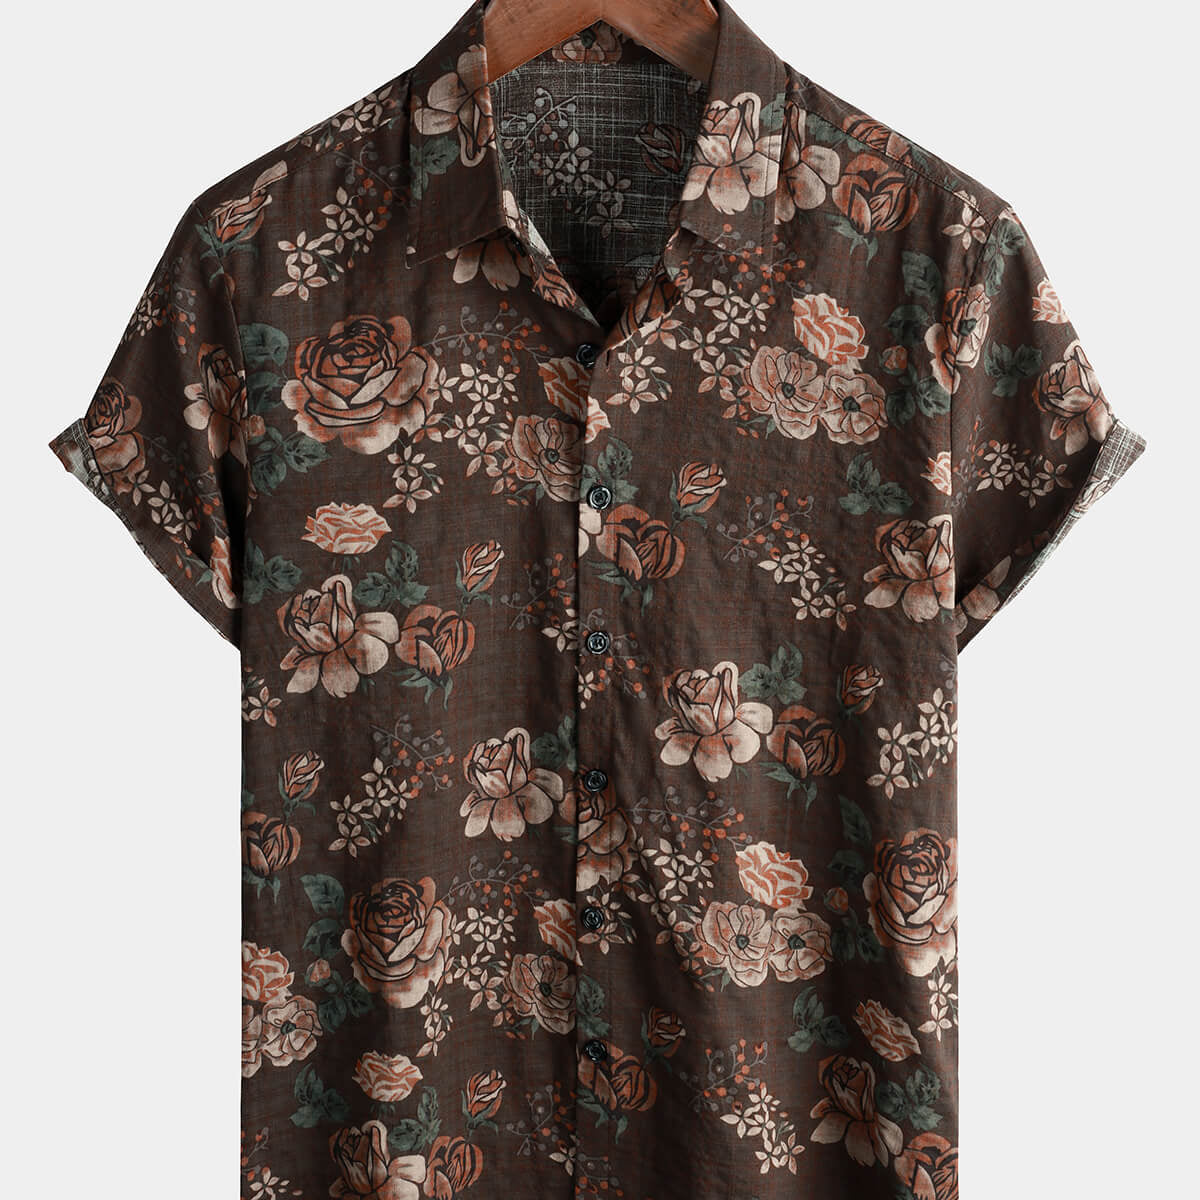 Men's Brown Cotton Vintage Floral Hawaiian Retro Beach Short Sleeve Button Up Shirt